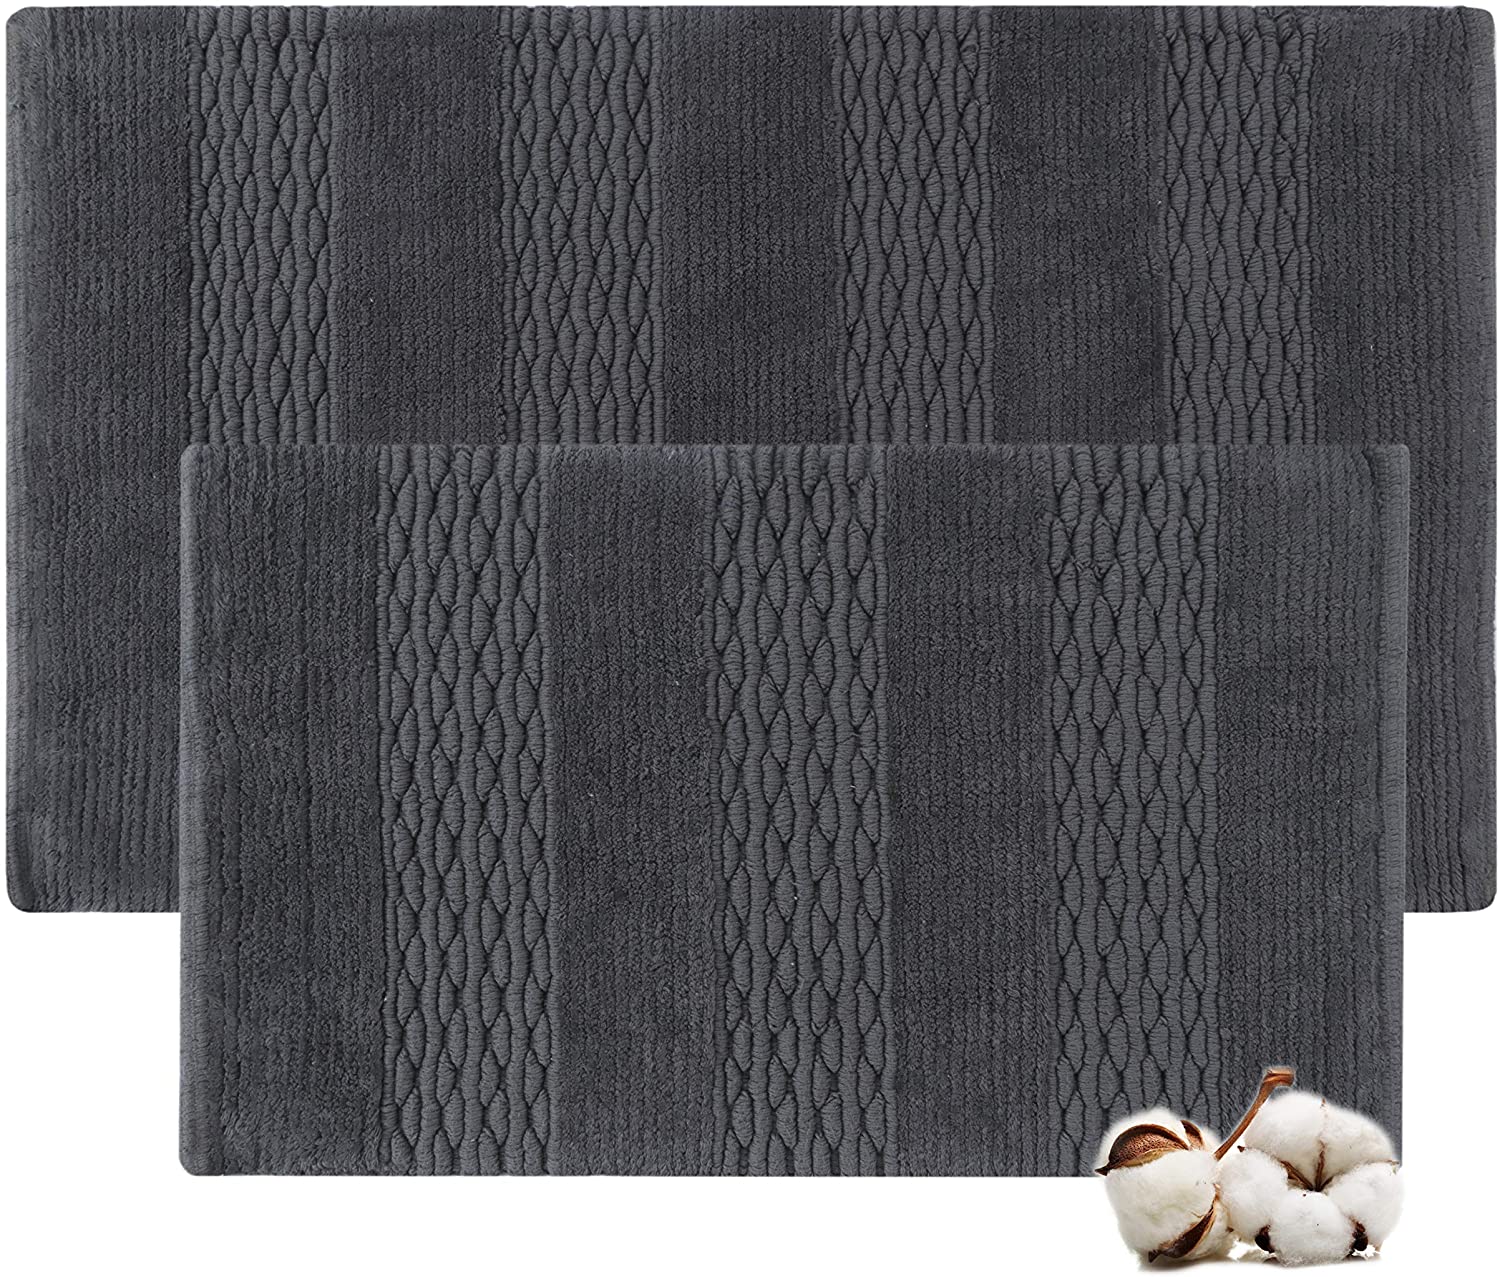 Cotton bath rugs water absorbent stripe design bathmat set of 2 - TreeWool Bathrugs#color_charcoal